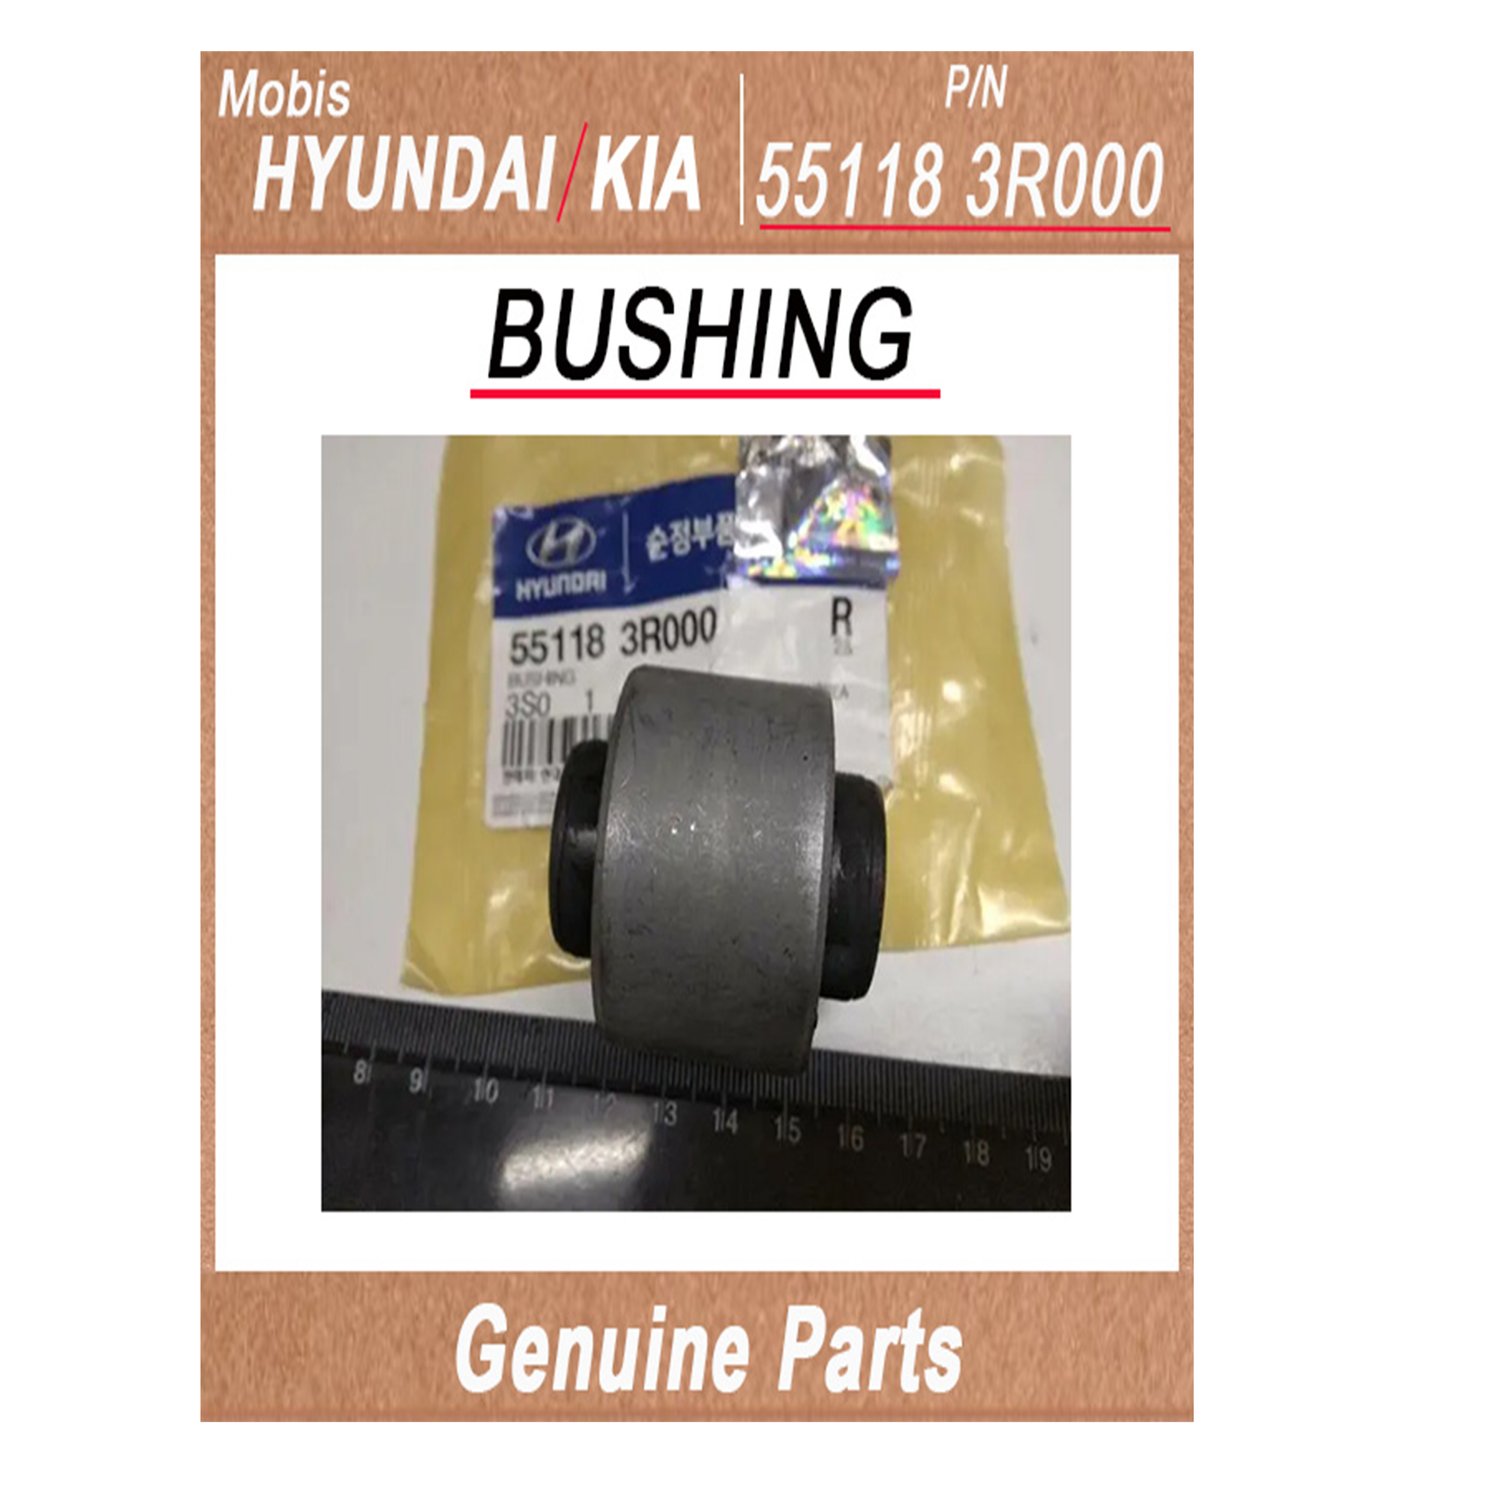 551183R000 _ BUSHING _ Genuine Korean Automotive Spare Parts _ Hyundai Kia _Mobis_